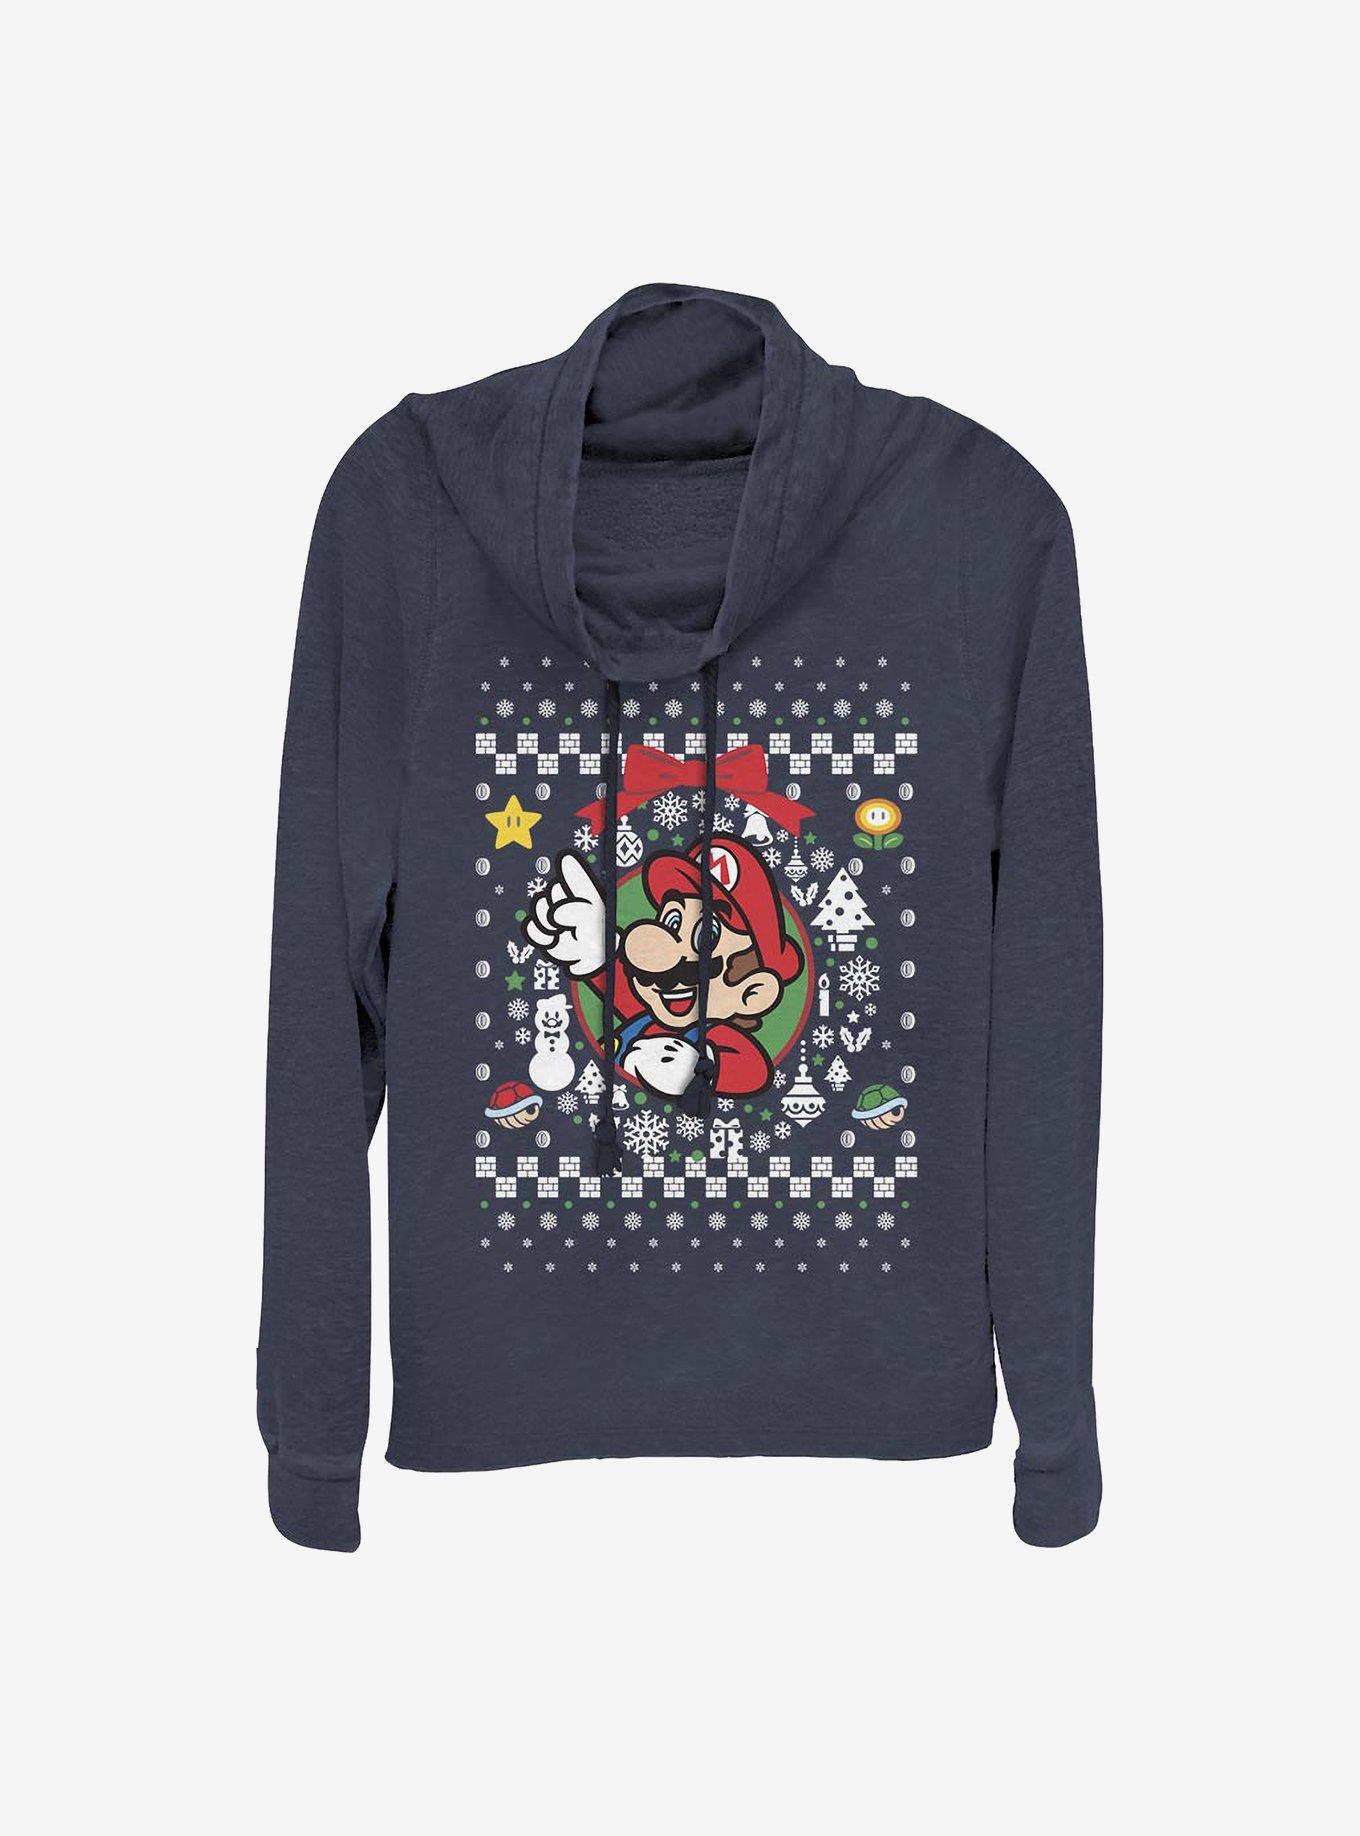 Super Mario Mario Wreath Ugly Christmas Sweater Cowl Neck Long-Sleeve Girls Top, NAVY, hi-res